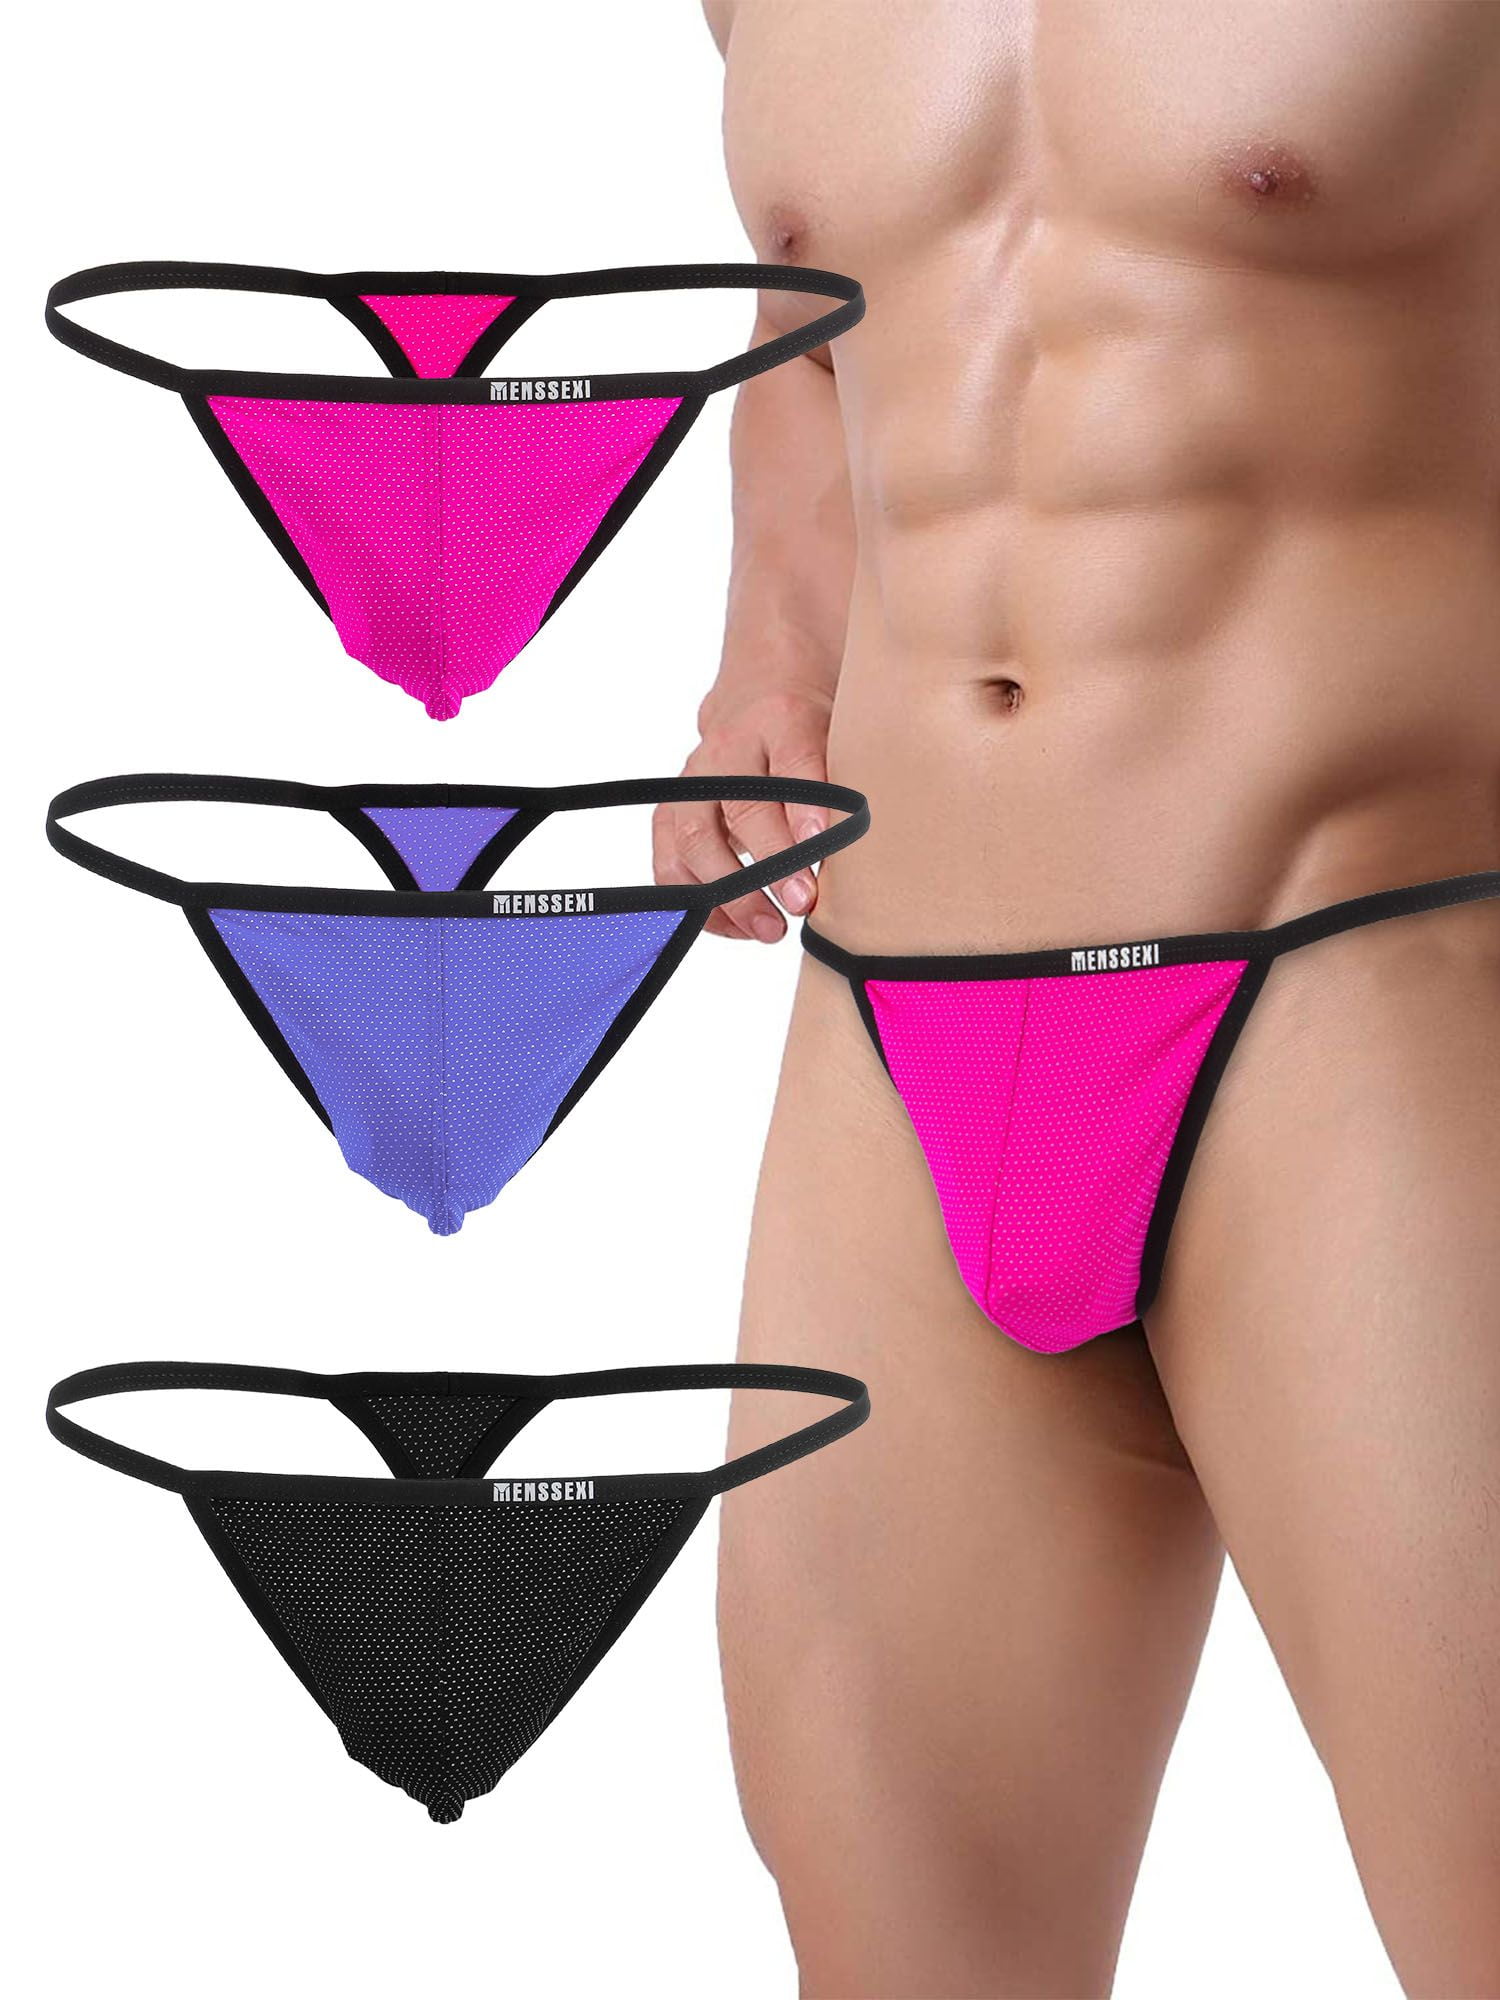 Briefs T-back G-string V-string Thong Underwear See-through Pouch Mesh Low  Wa 